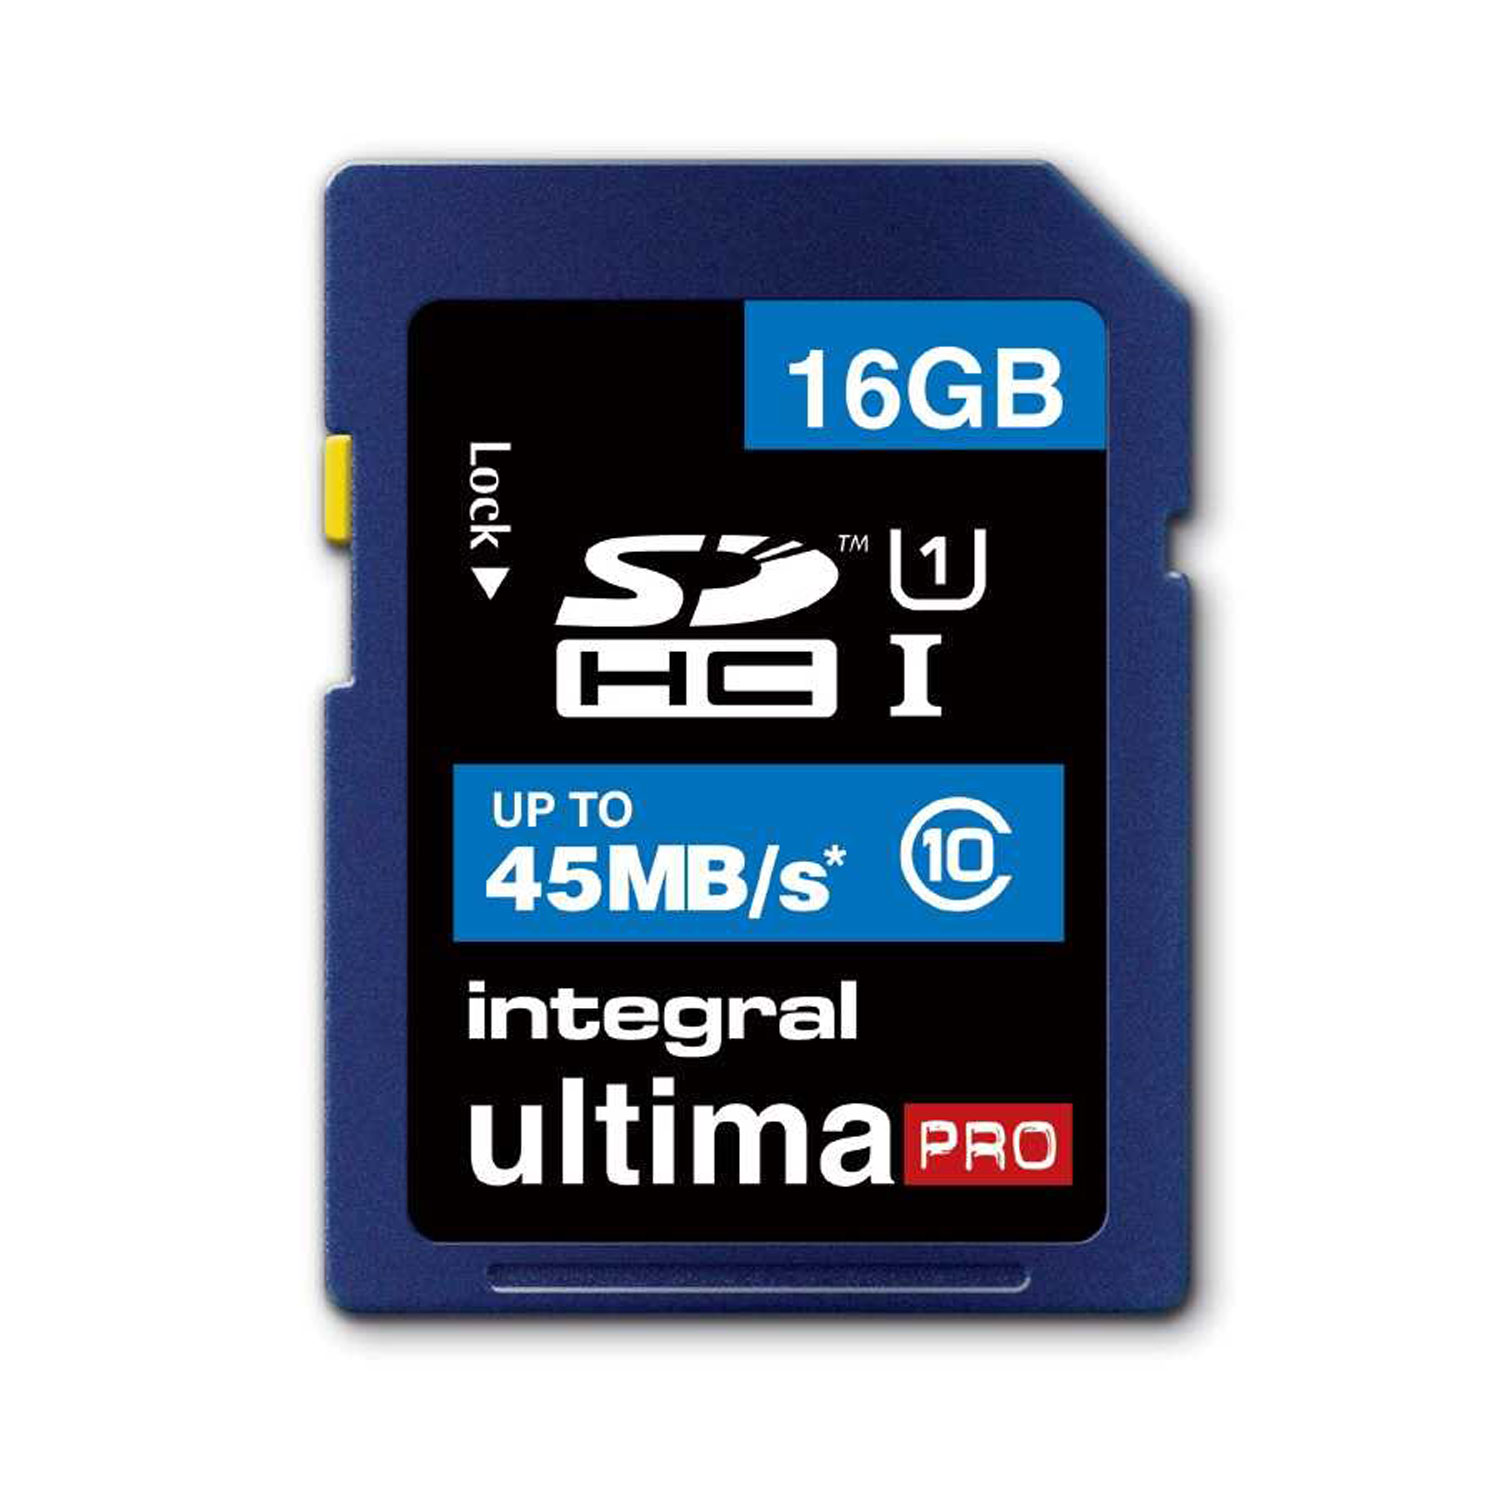 Integral 16GB UltimaPRO SD Card (SDHC) - 45MB/s